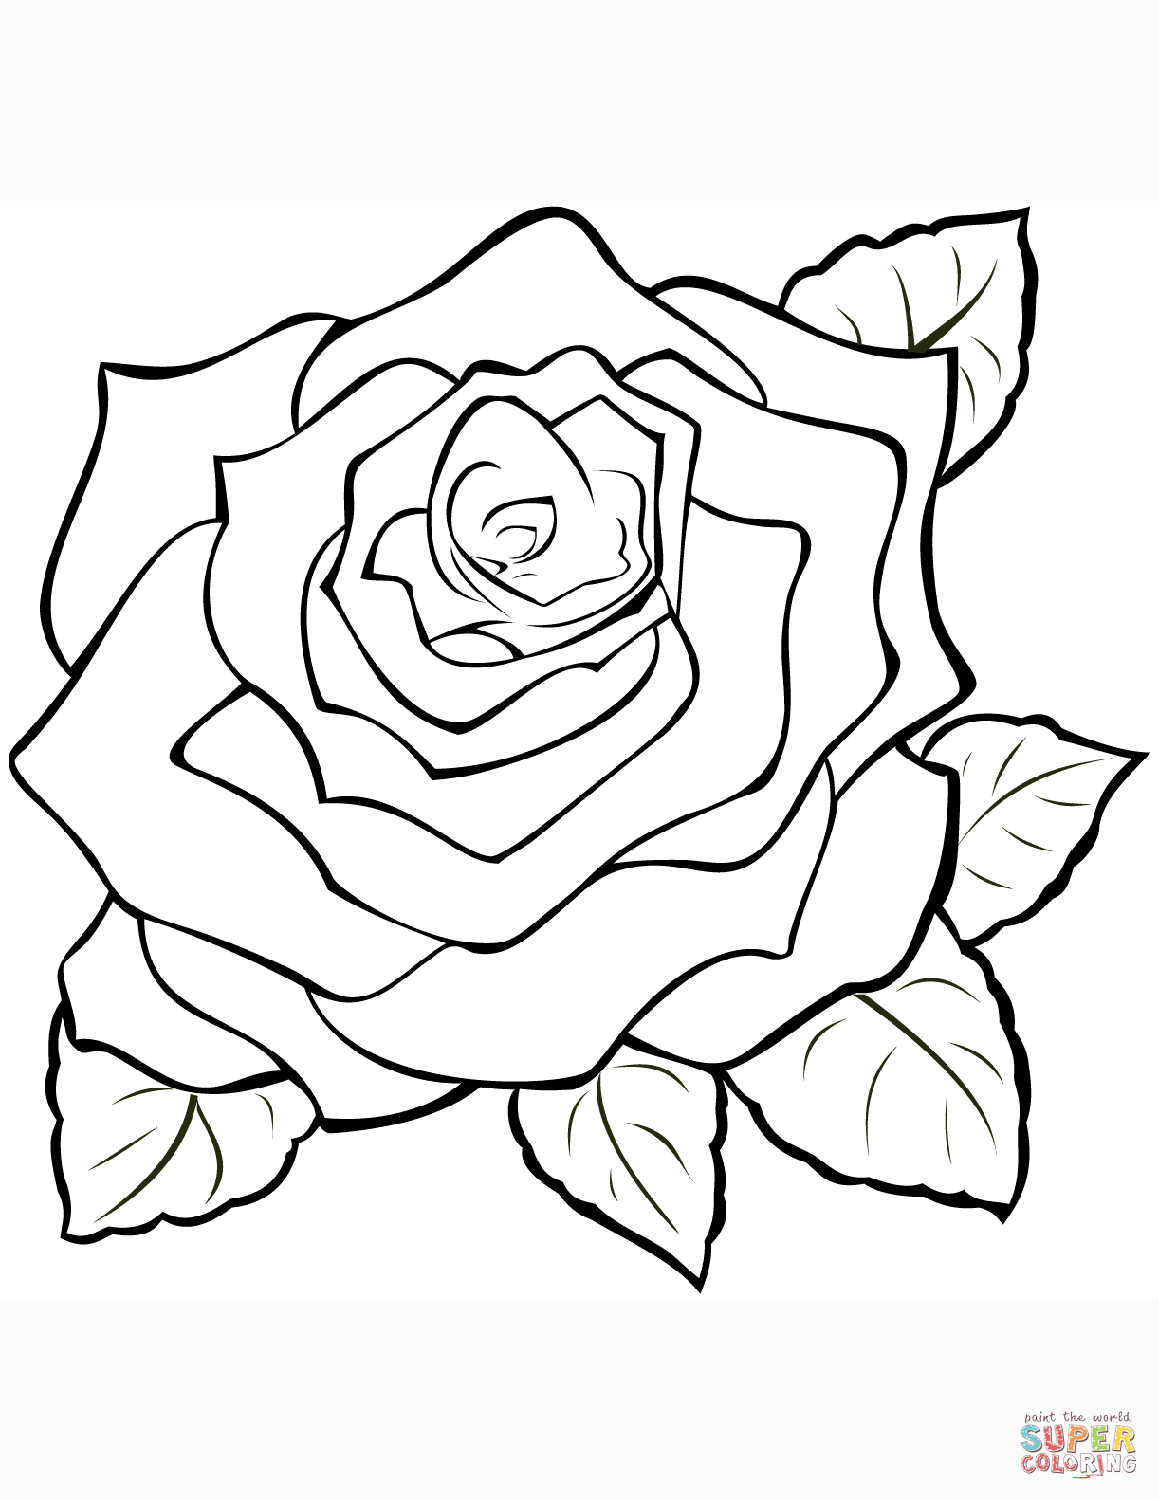 Rosa dalle rose